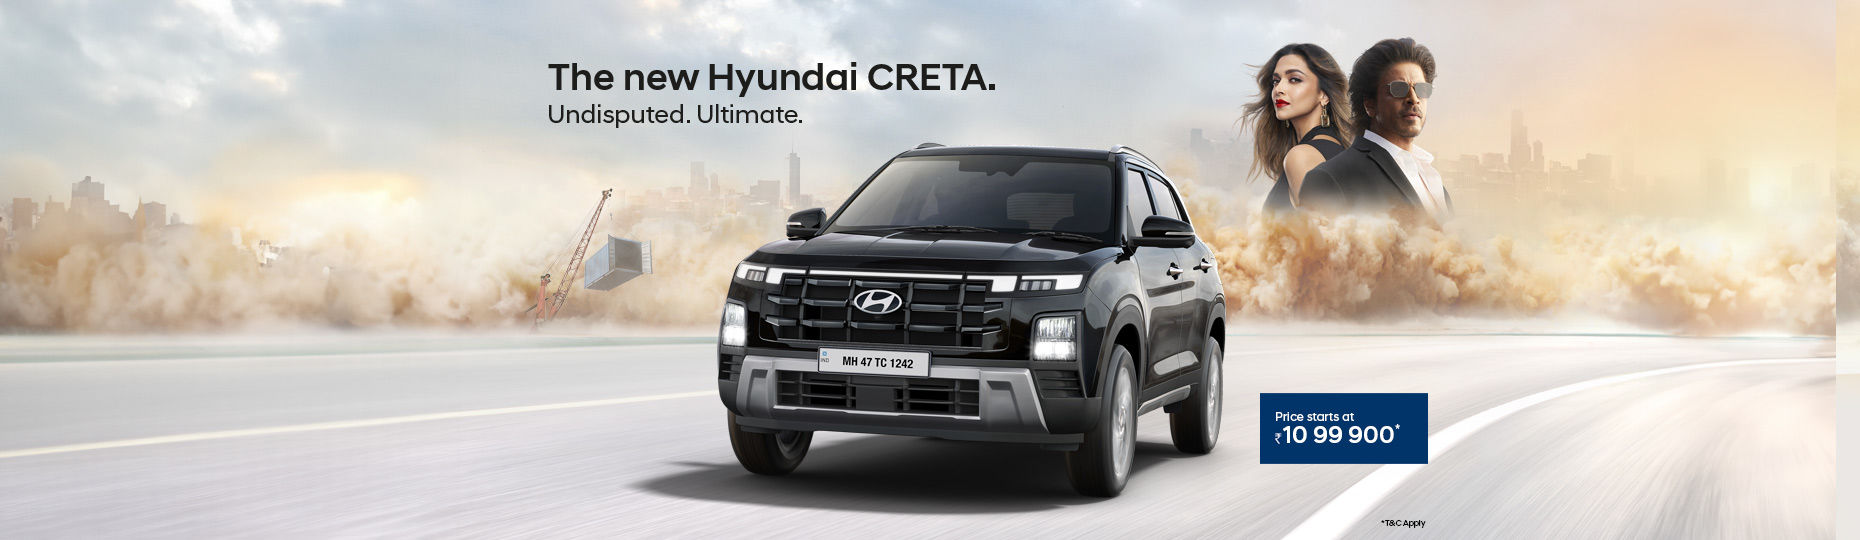 The new Hyundai CRETA